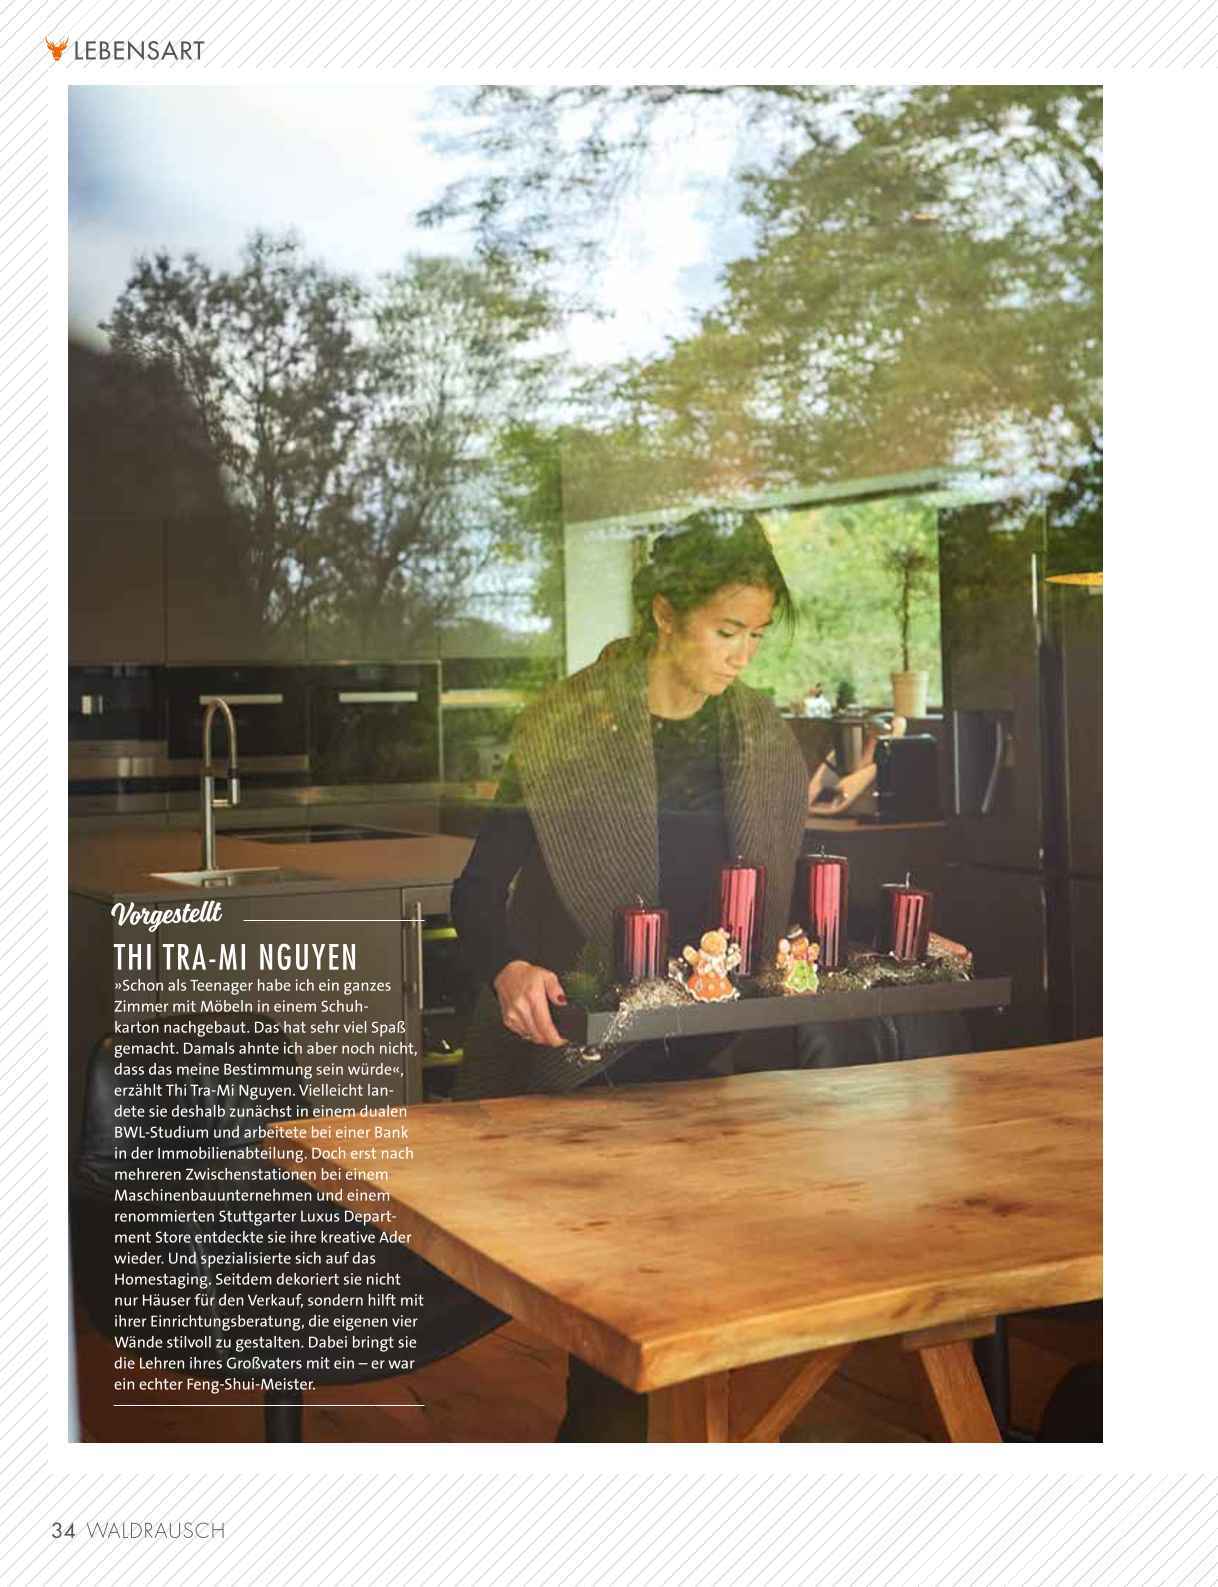 Waldrausch Magazine addresses the interior arts of Thi Tra-Mi Nguyen, the founder of Raumlevel